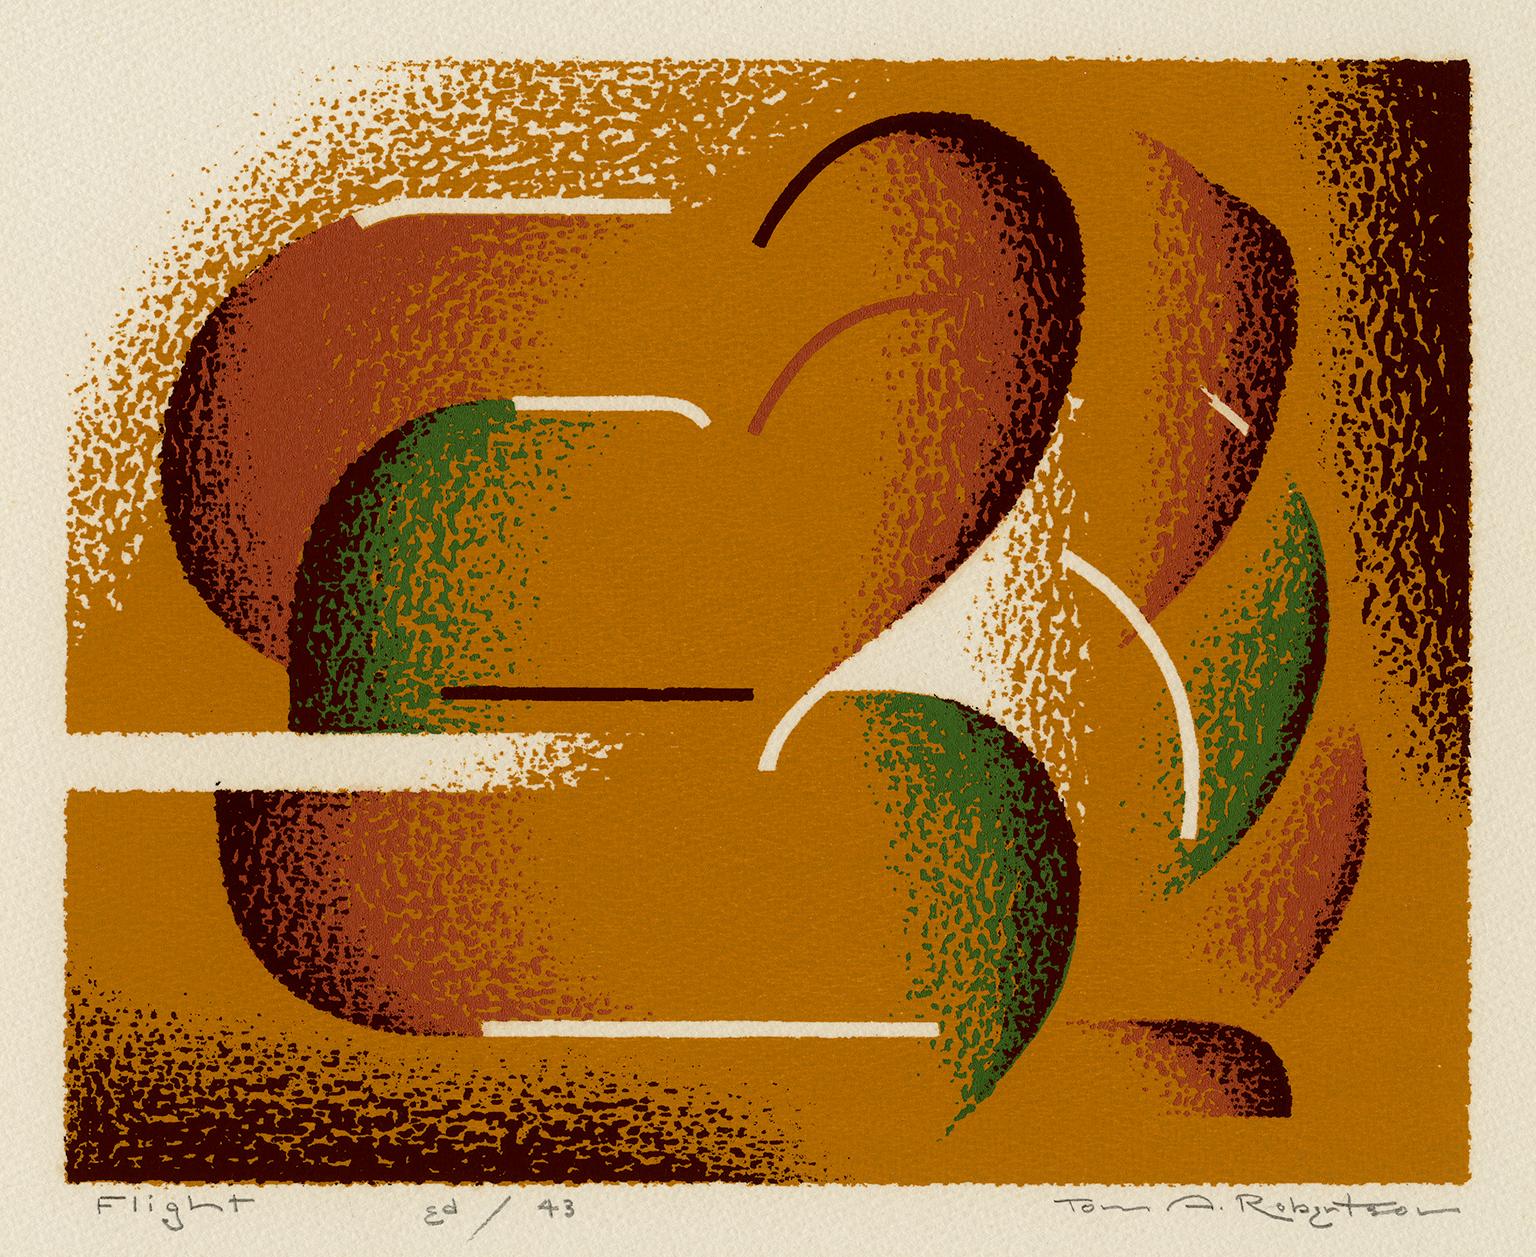 Thomas A. Robertson Abstract Print – Flucht" - Modernismus der Jahrhundertmitte